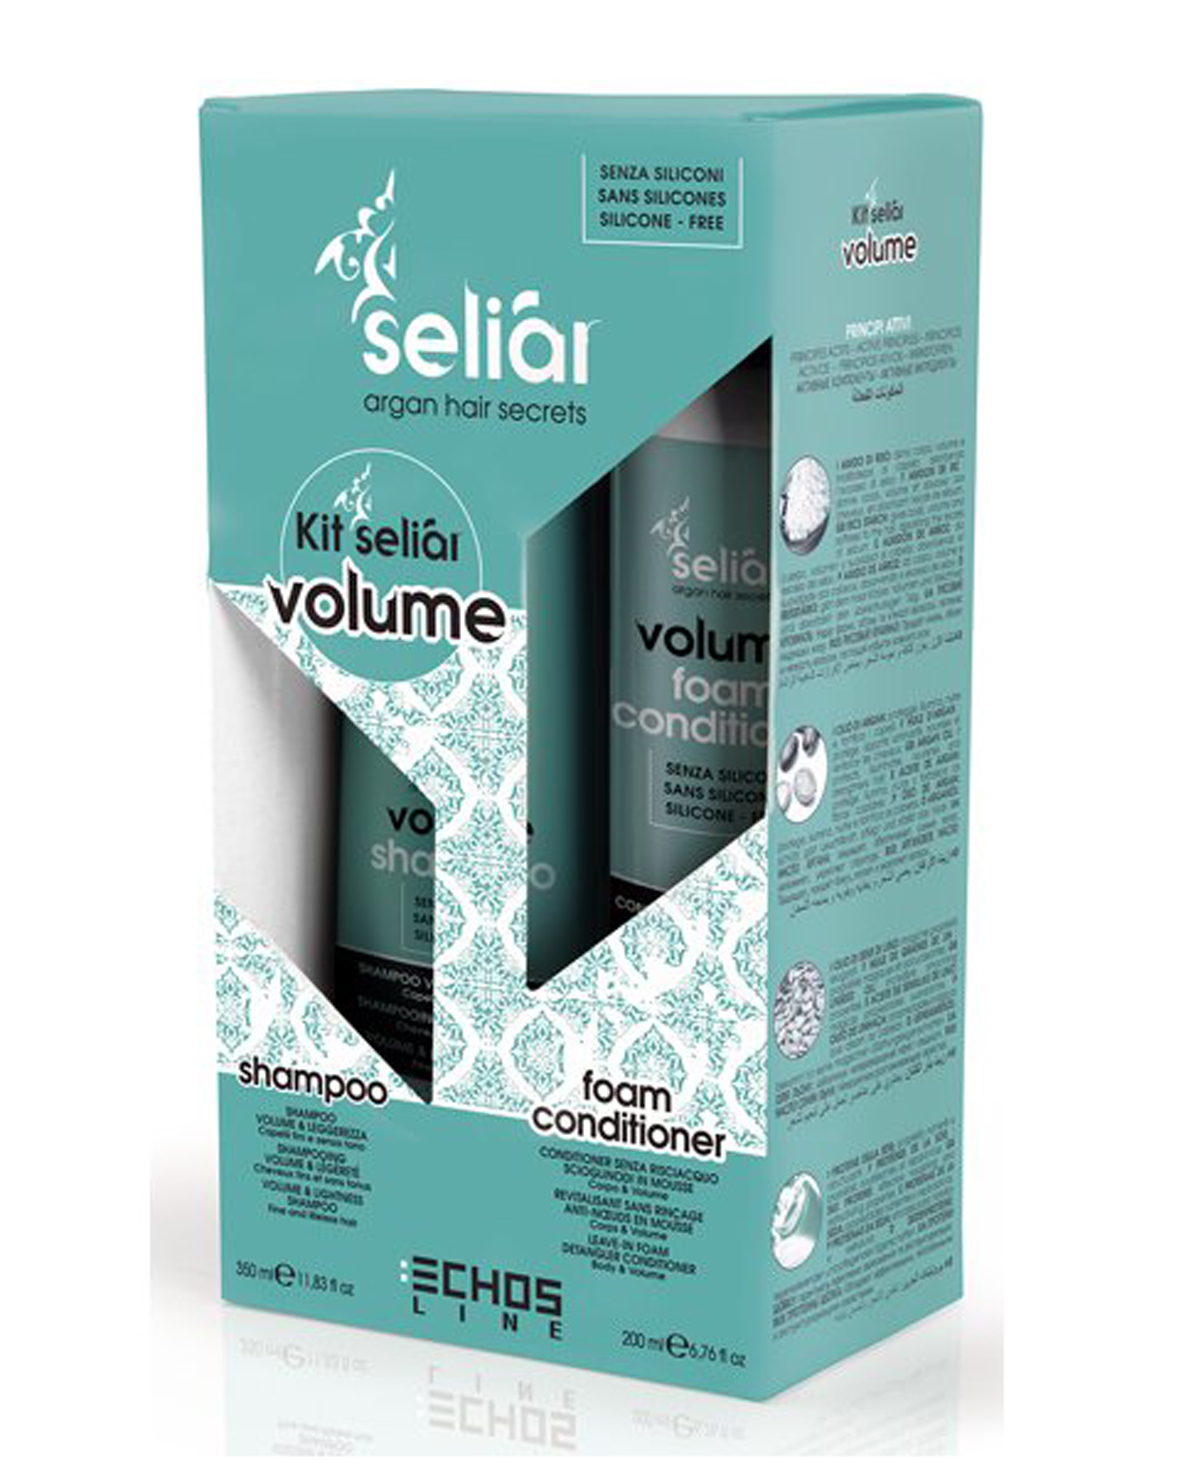 Echosline Seliár Volume sada - šampon, 350 ml + pěnový kondicionér, 200 ml